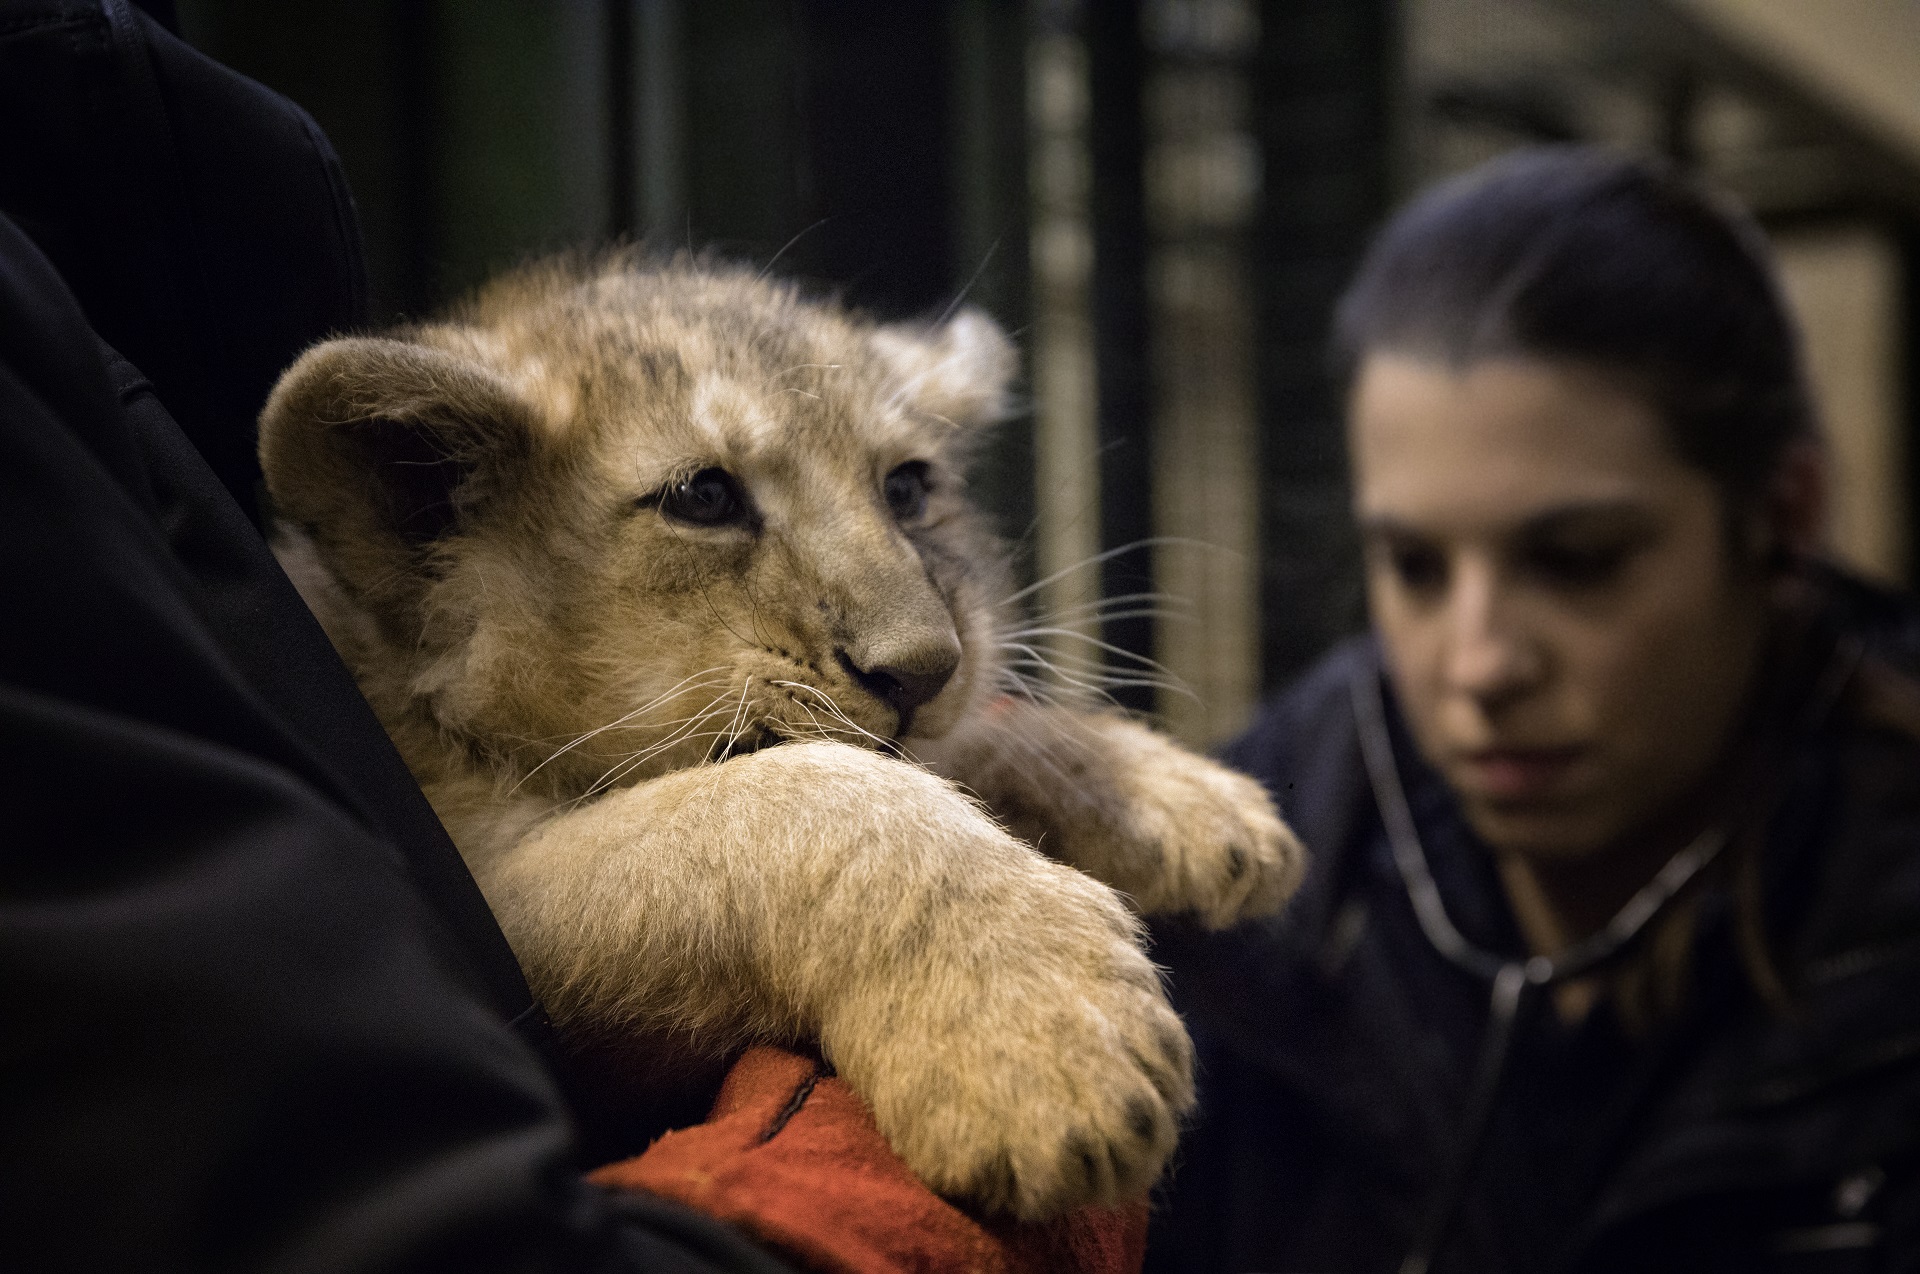 Steph Mota vet doing health check on lion cub

IMAGE: Laura Moore 2022